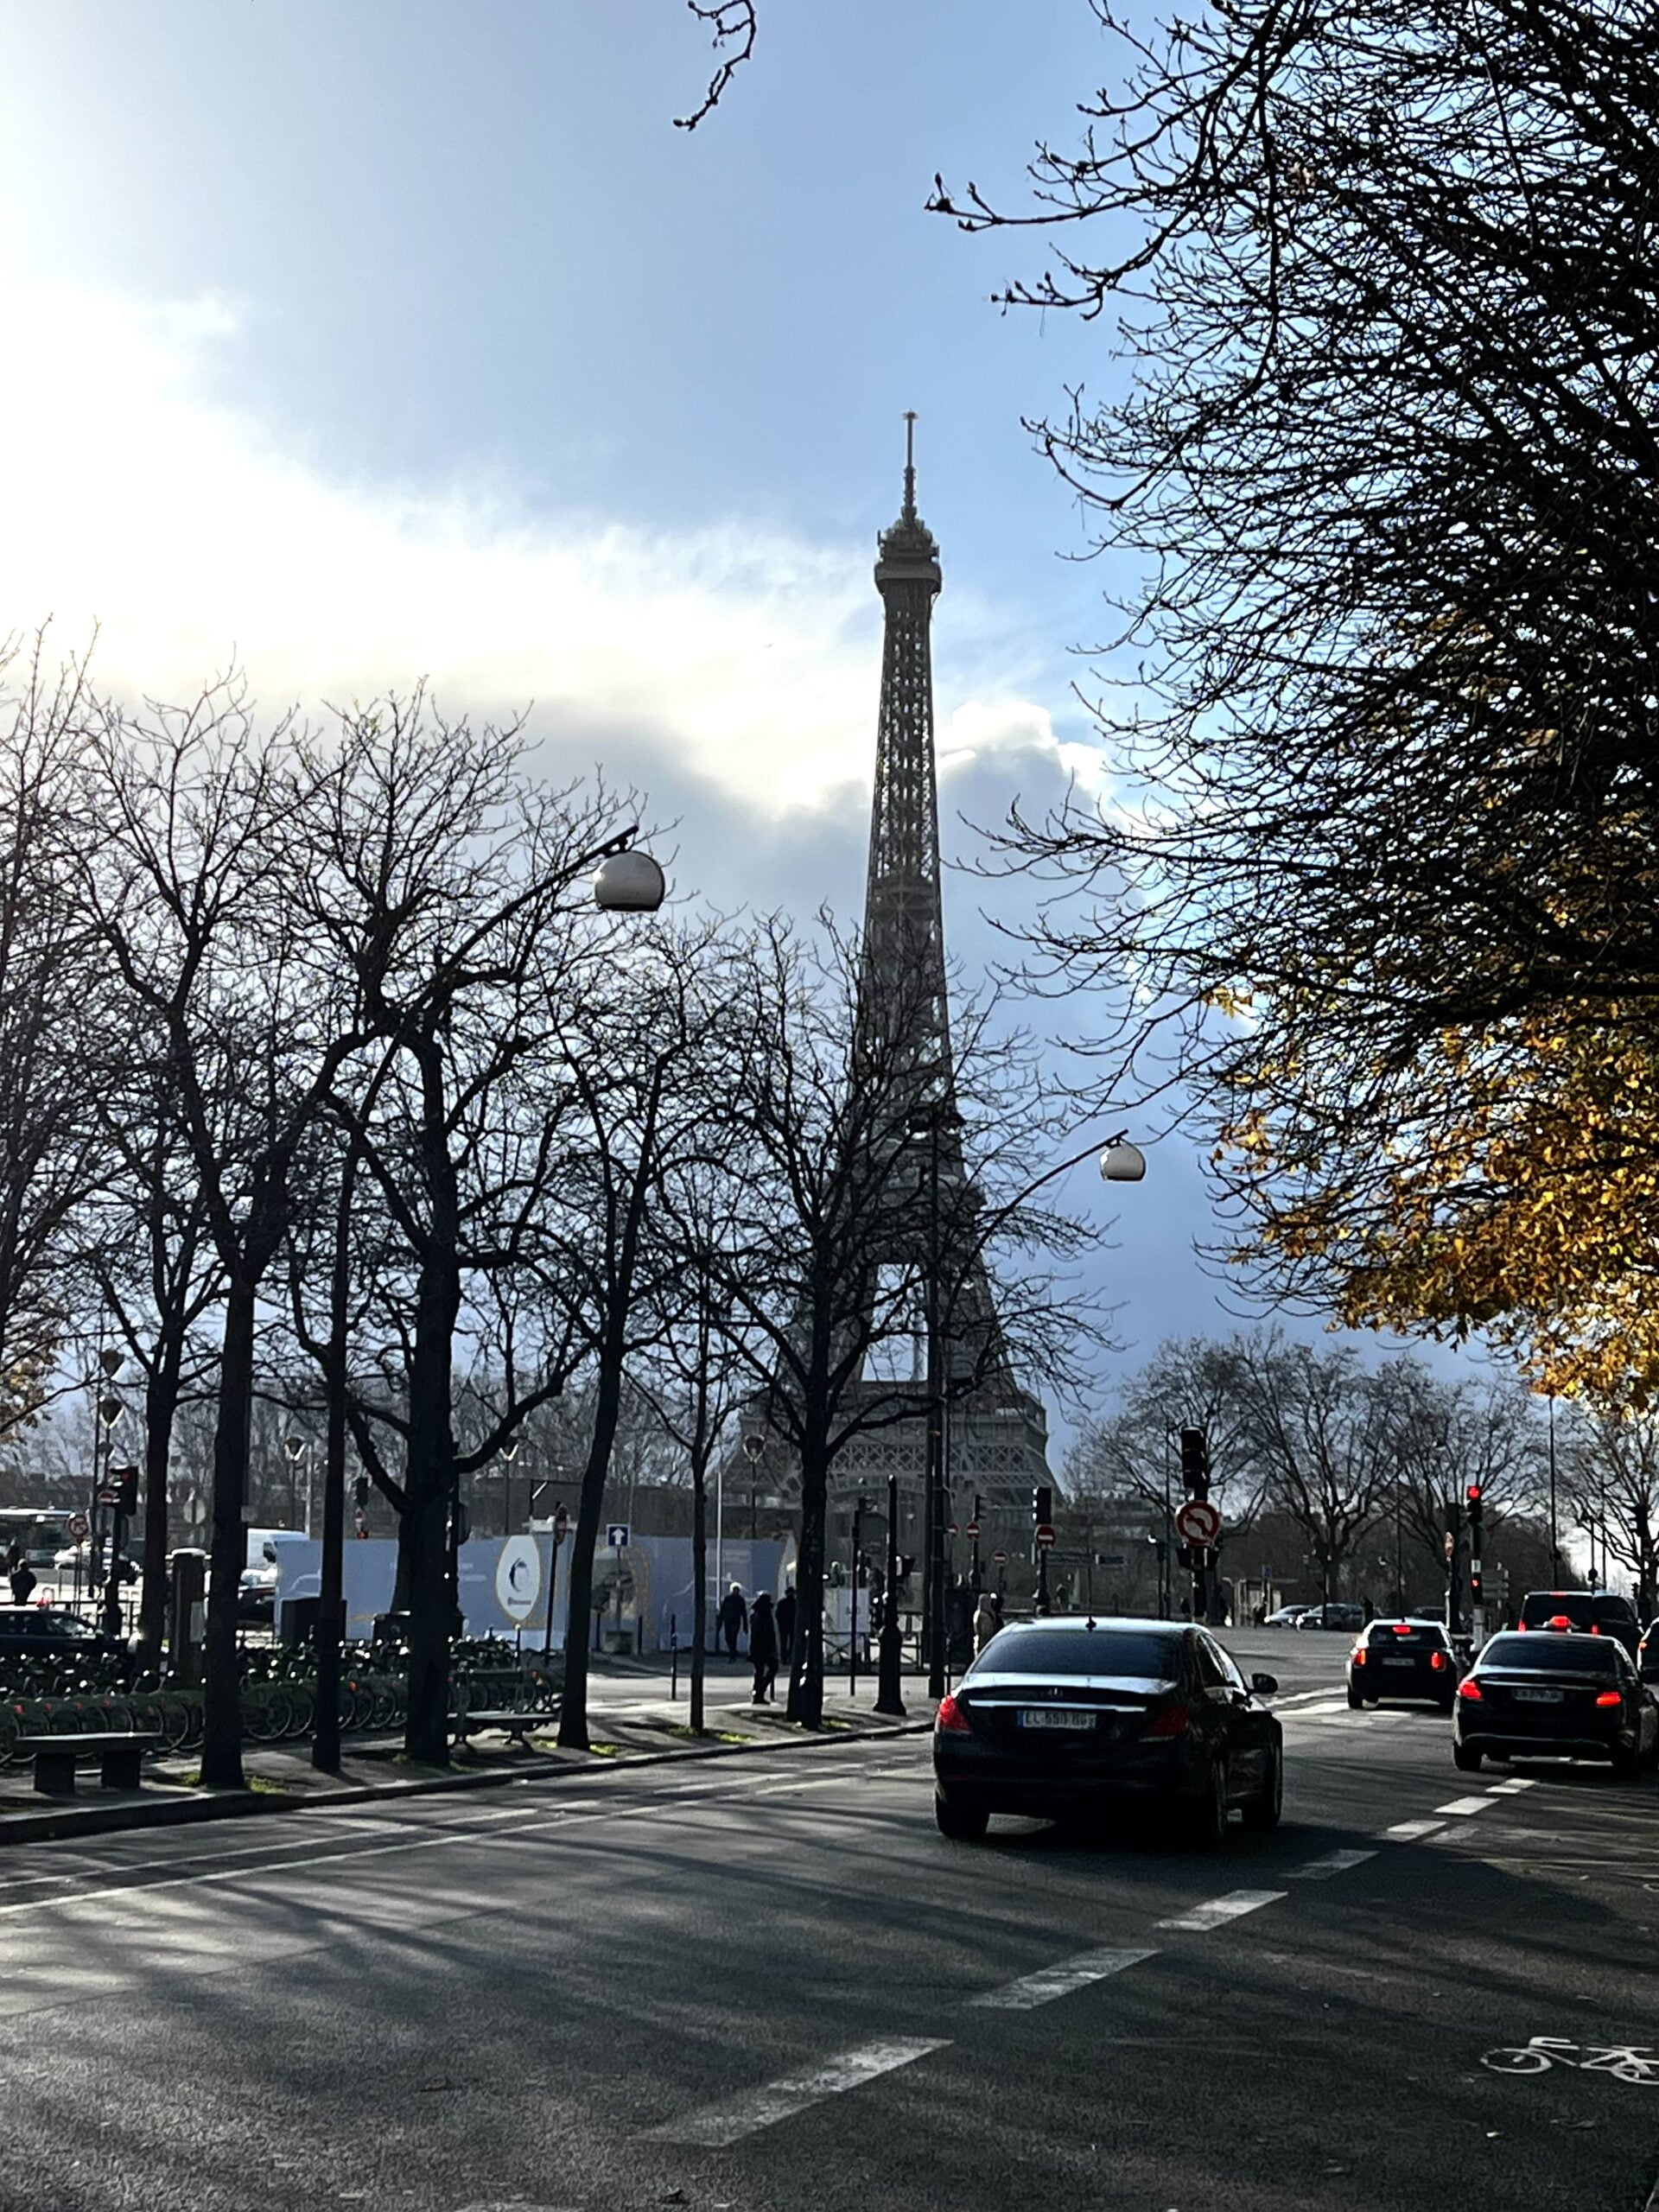 Travel Tips from Paris: Hermès Prices, VAT and Customs - PurseBop